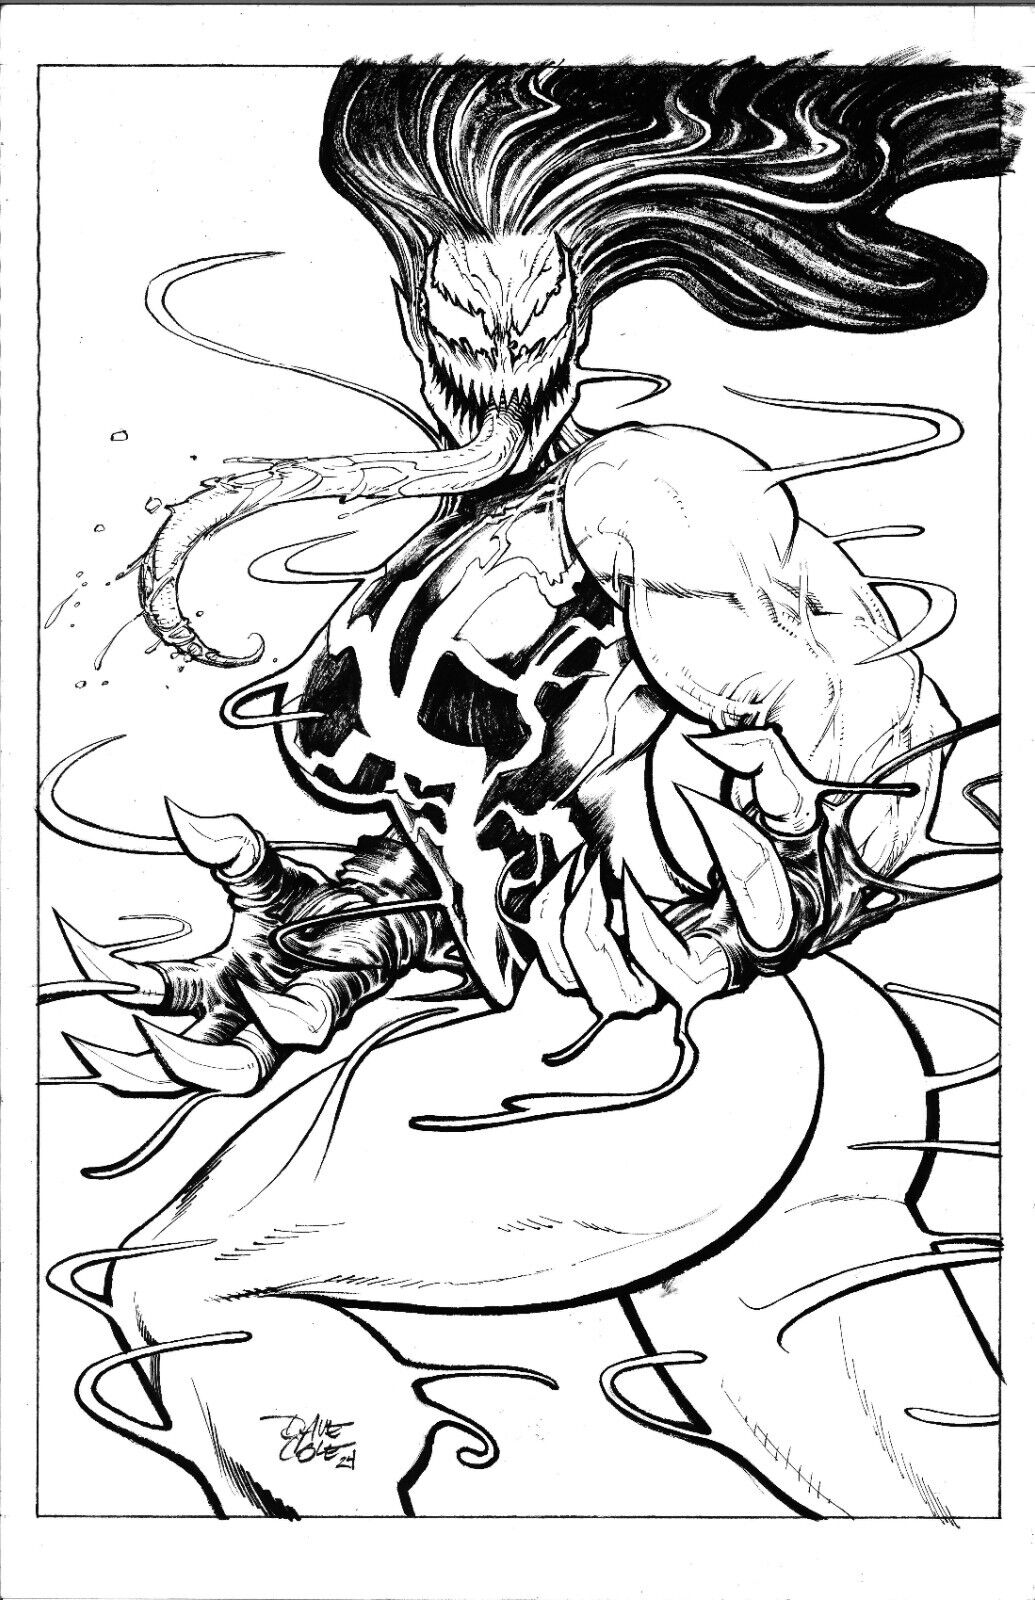 Marvel Venom She-Hulk 'What-If' Sketch Black & White 11x17 Original Artwork